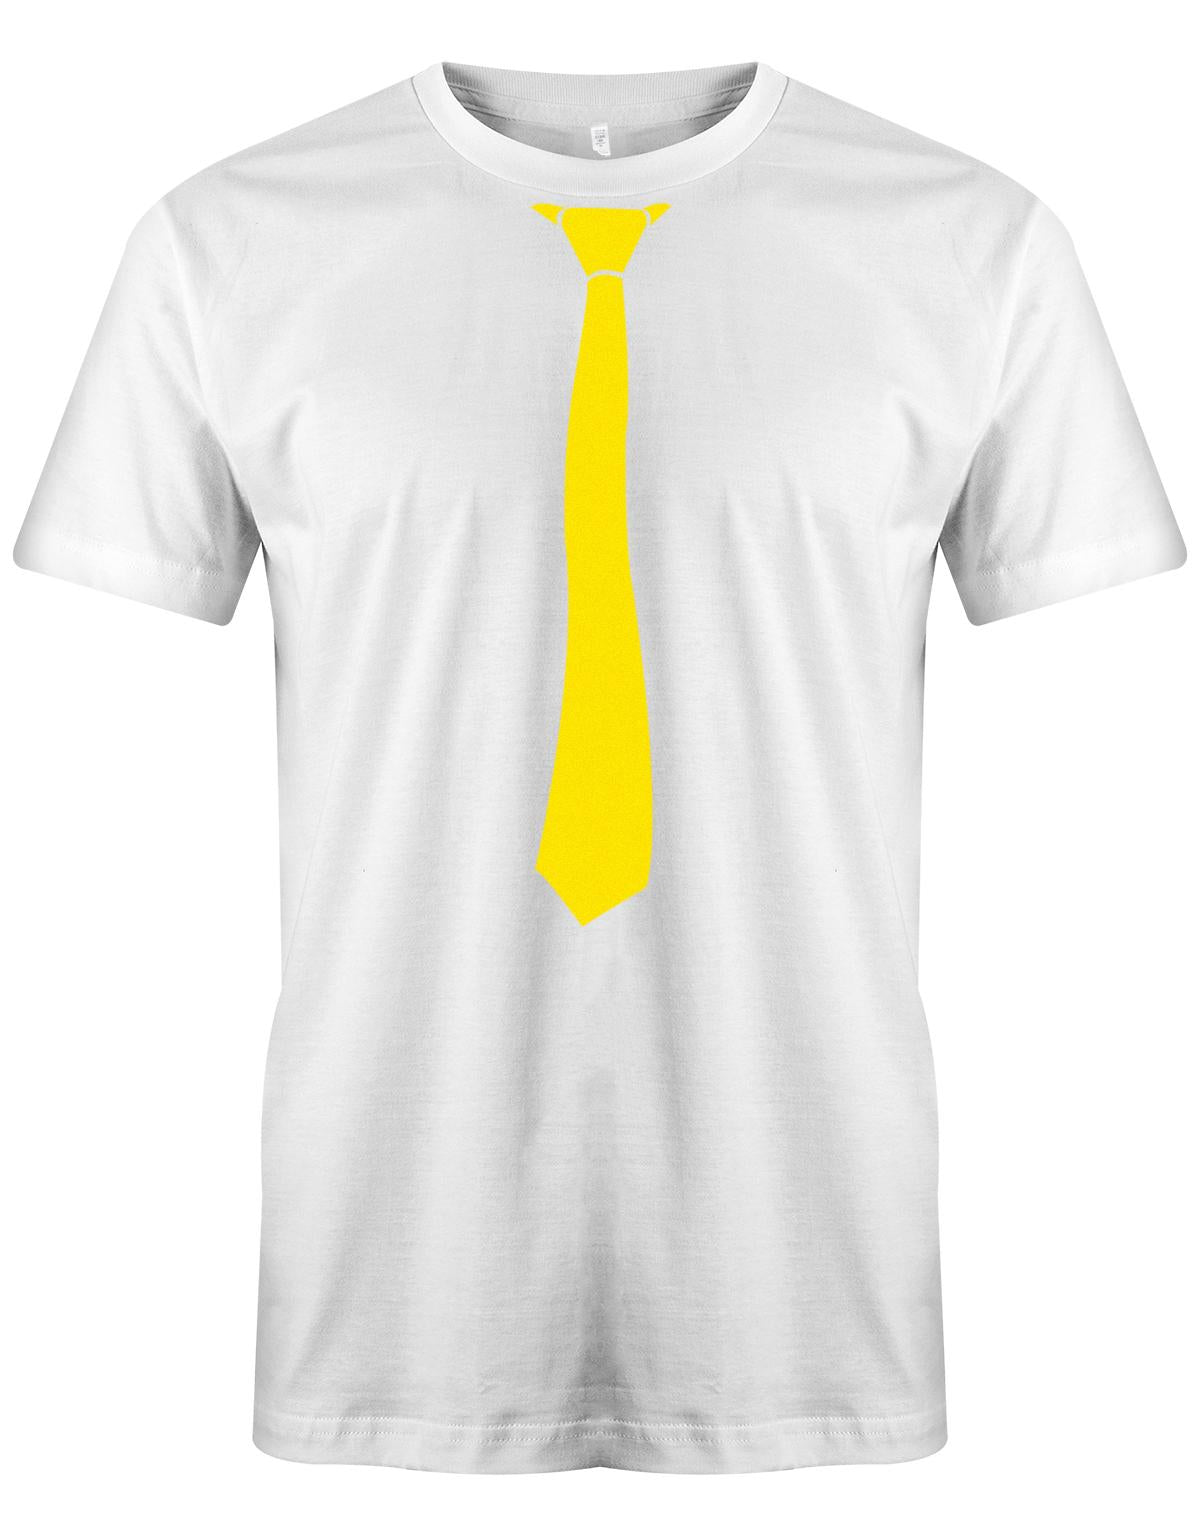 Krawatte-Sportlich-Herren-Shirt-JGA-Weiss-Gelb